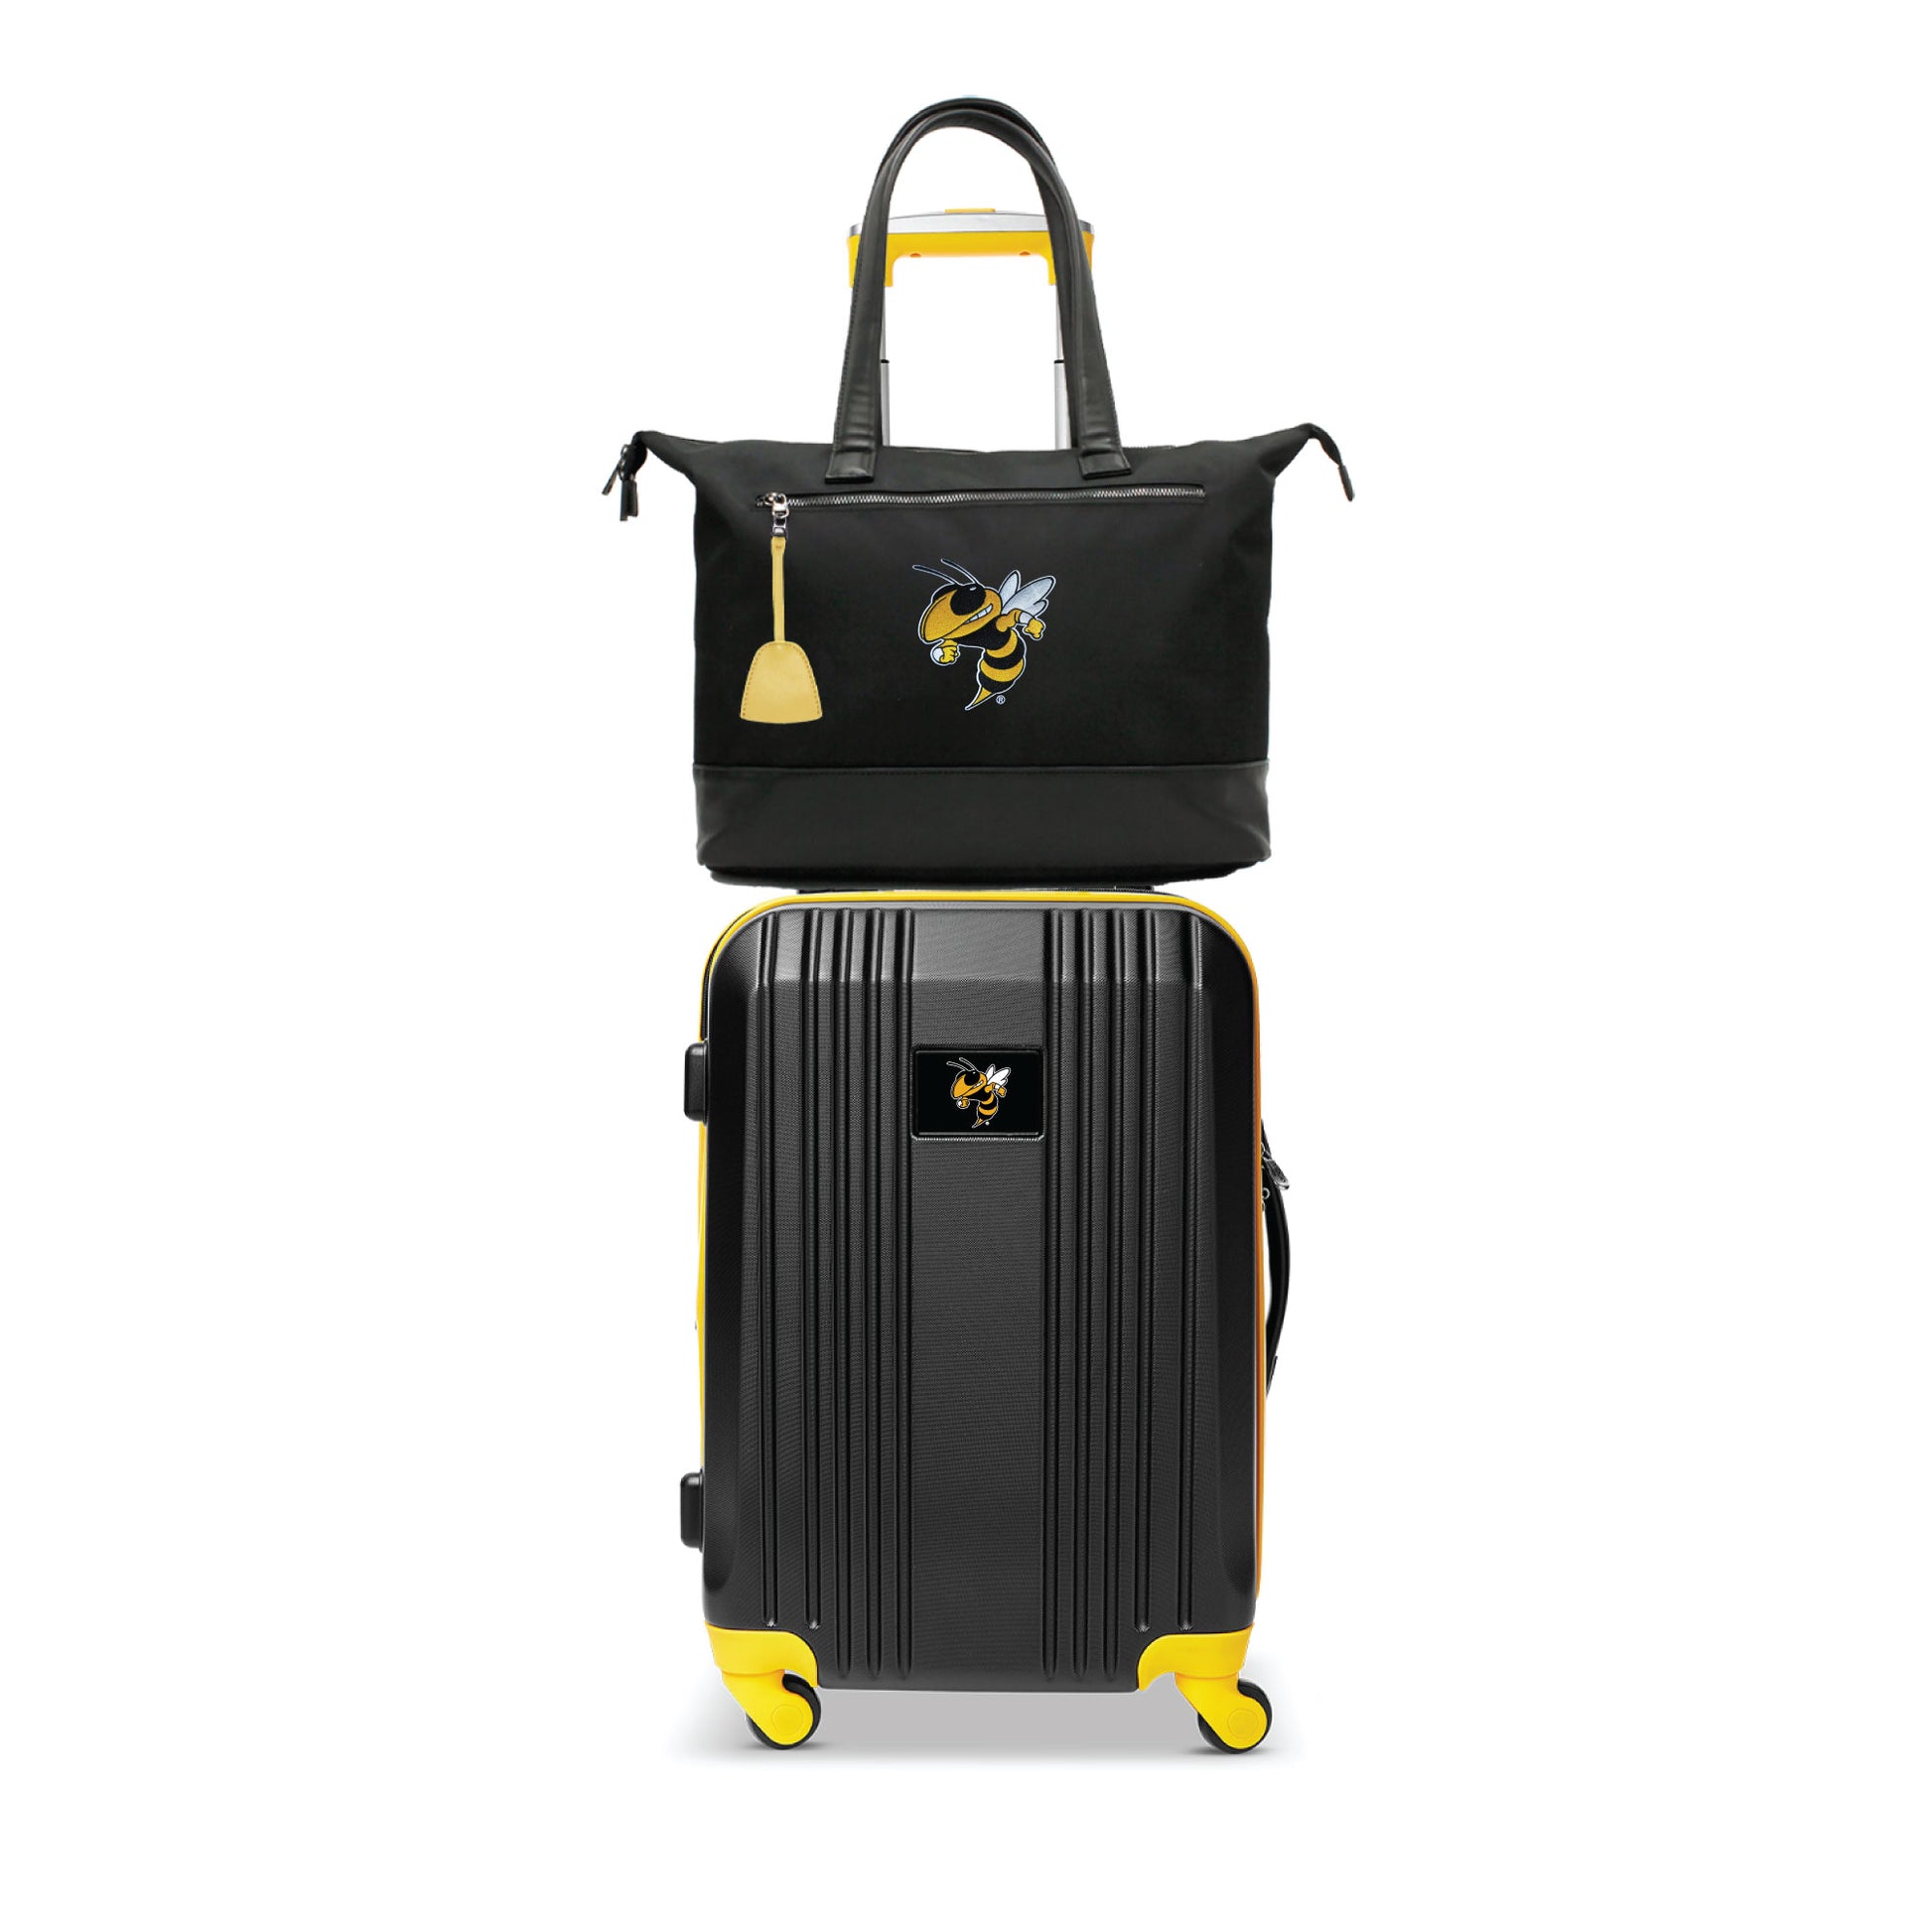 Georgia Tech Yellow Jackets Premium Laptop Tote Bag and Luggage Set